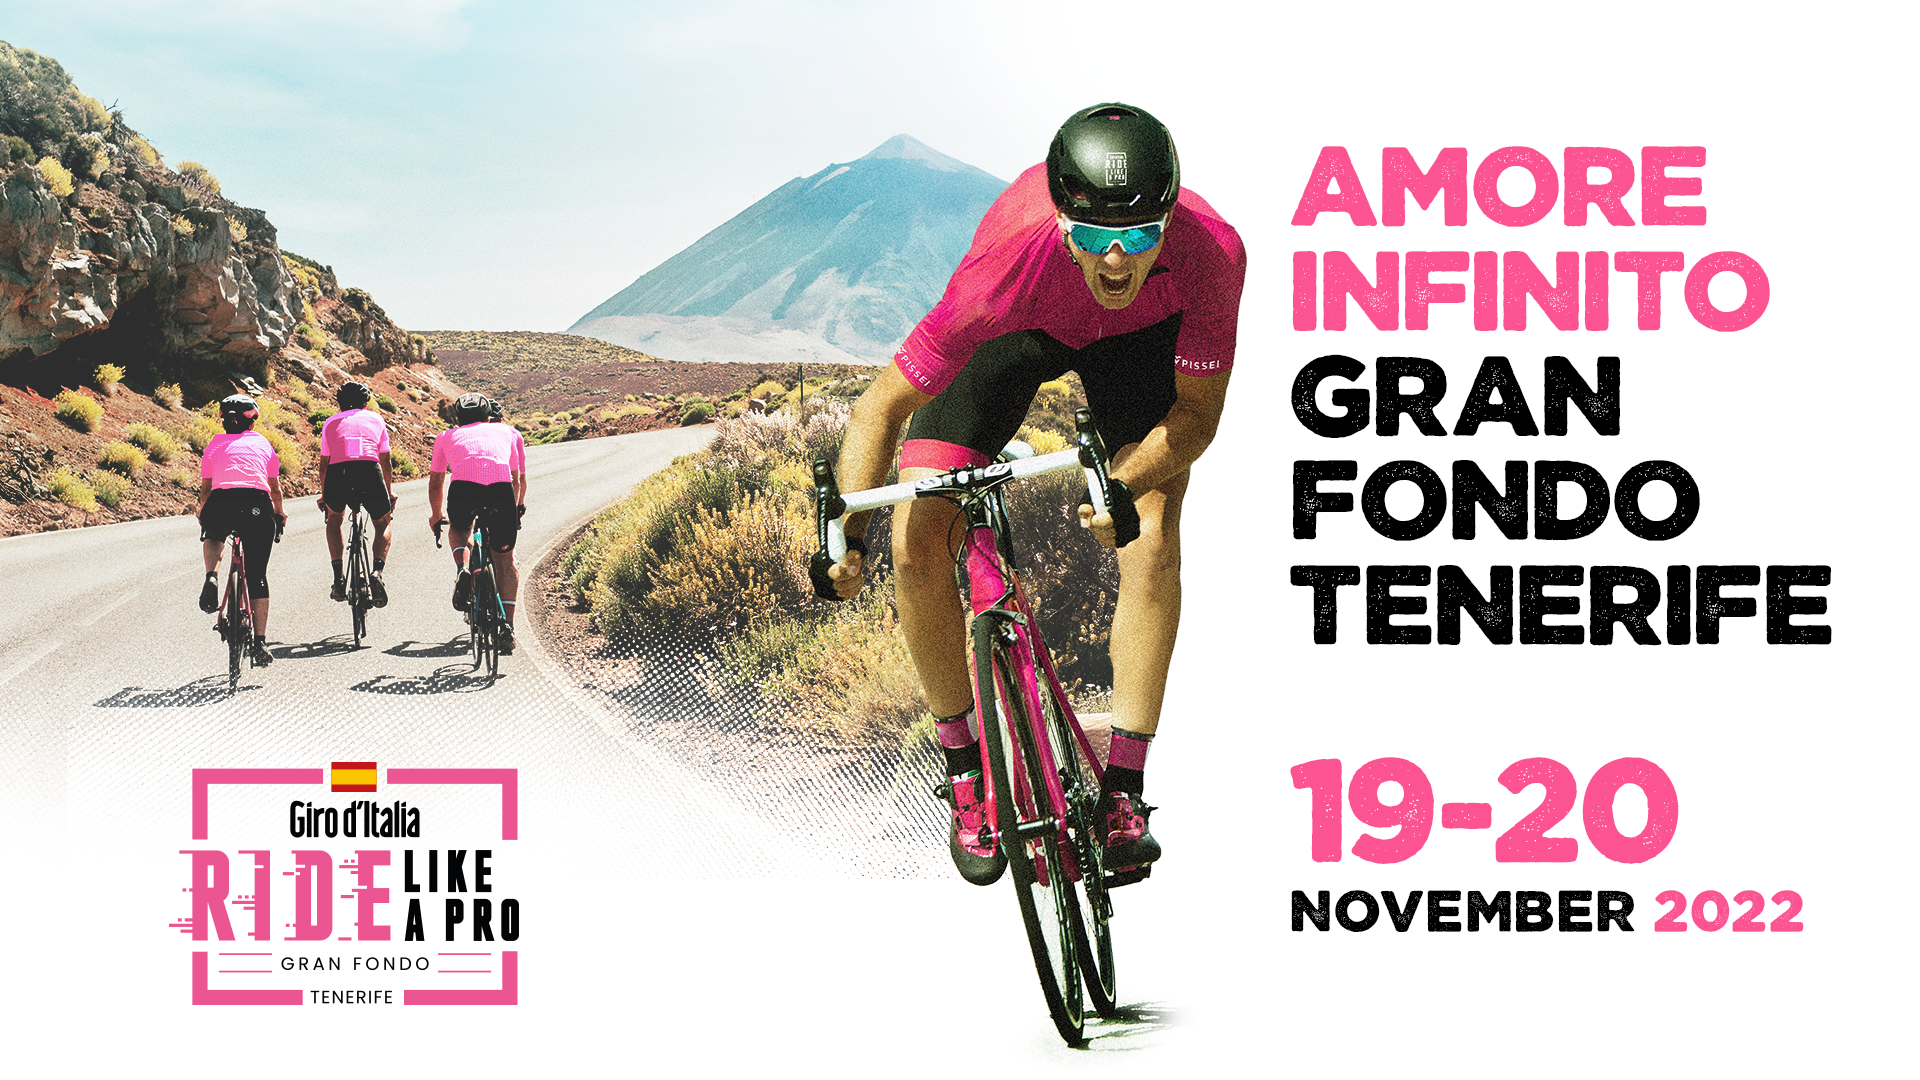 The Gran Fondo Giro d’Italia Ride Like a Pro comes to Tenerife, Spain, on the 19th and 20th of November 2022